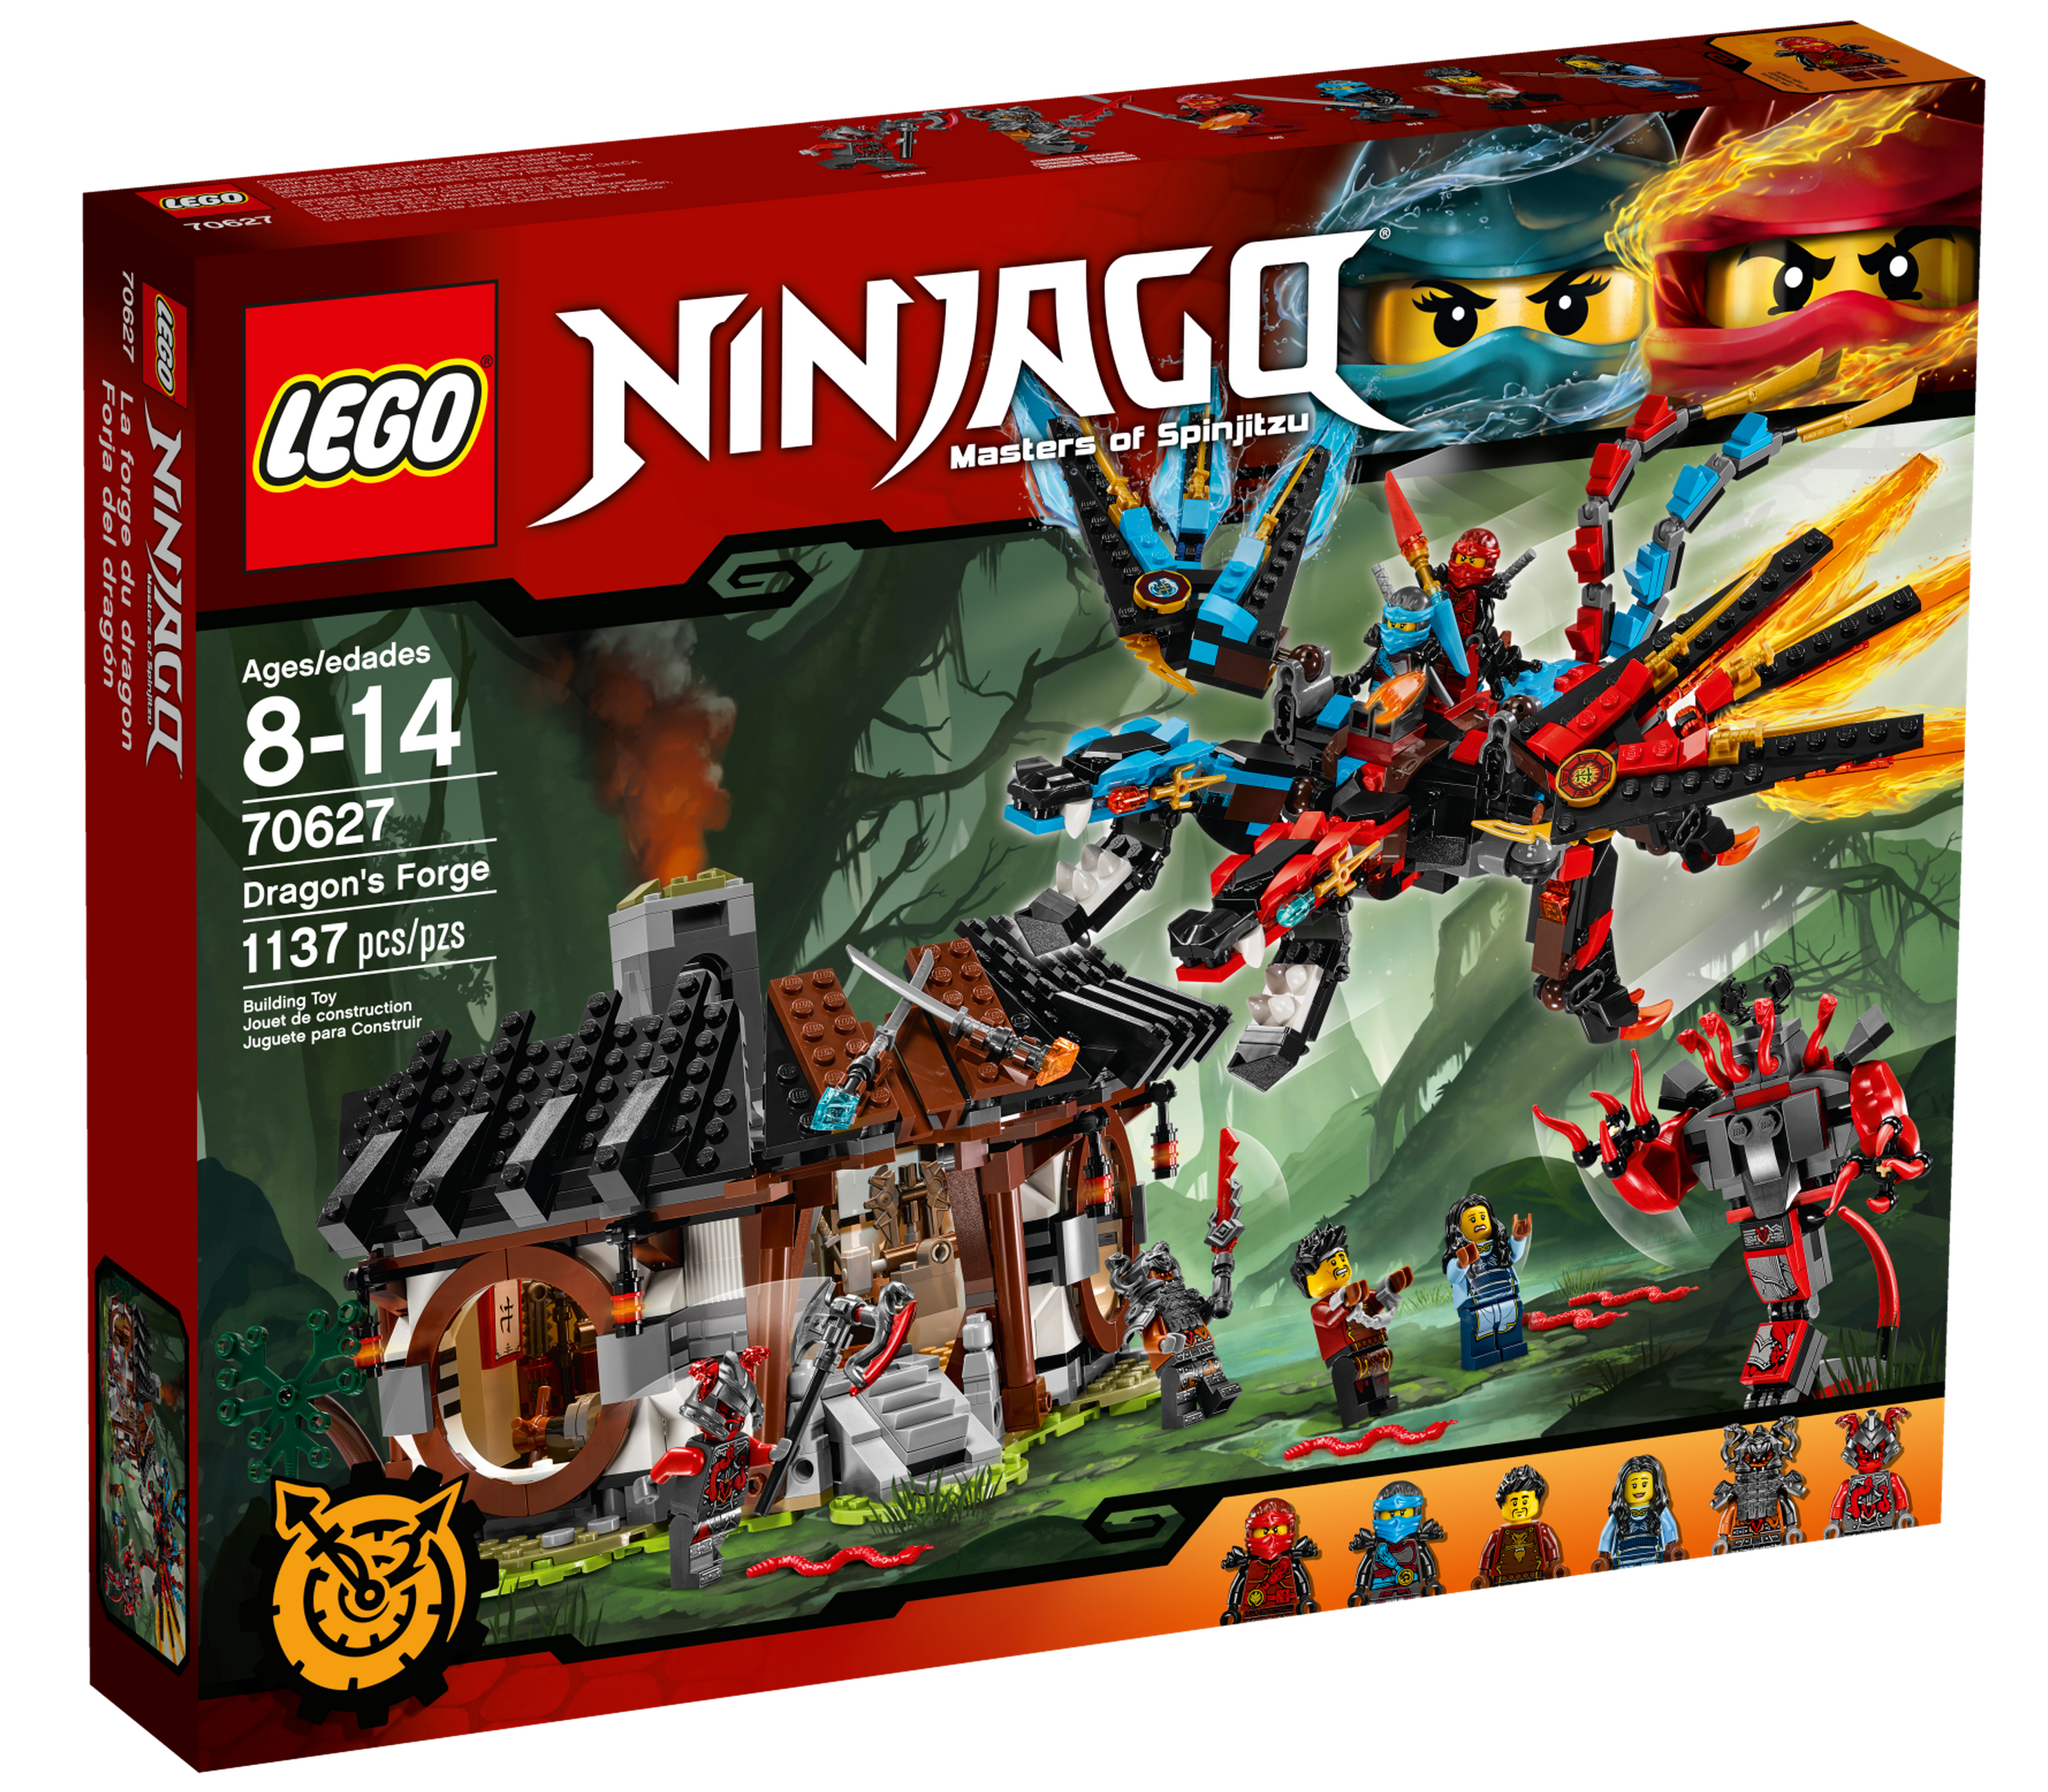 lego ninjago dragon hunters sets